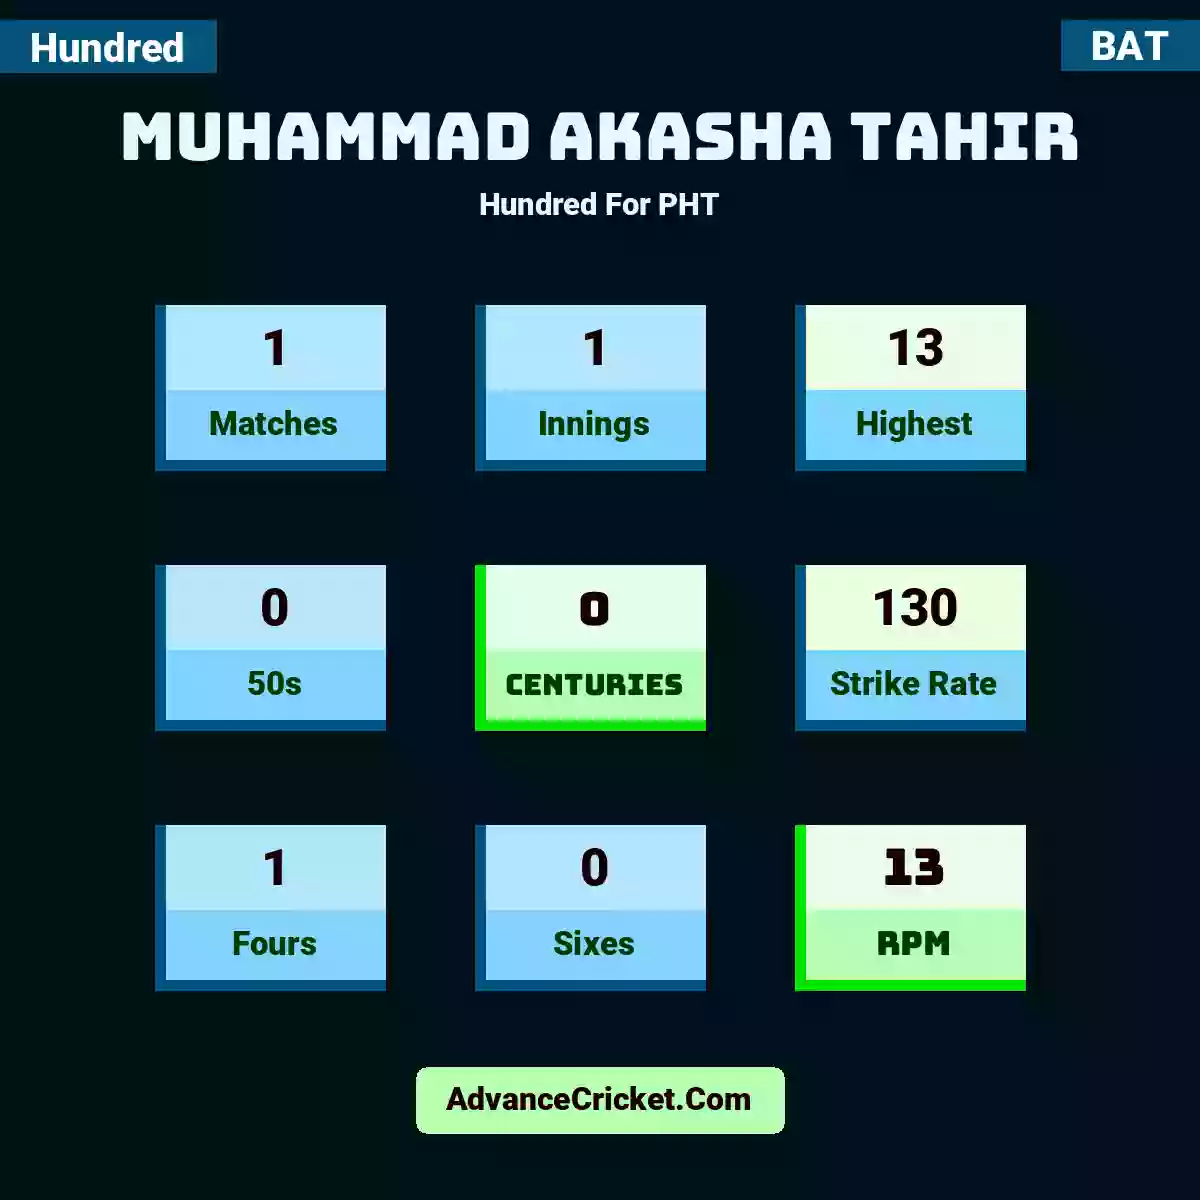 Muhammad Akasha Tahir Hundred  For PHT, Muhammad Akasha Tahir played 1 matches, scored 13 runs as highest, 0 half-centuries, and 0 centuries, with a strike rate of 130. M.Akasha.Tahir hit 1 fours and 0 sixes, with an RPM of 13.